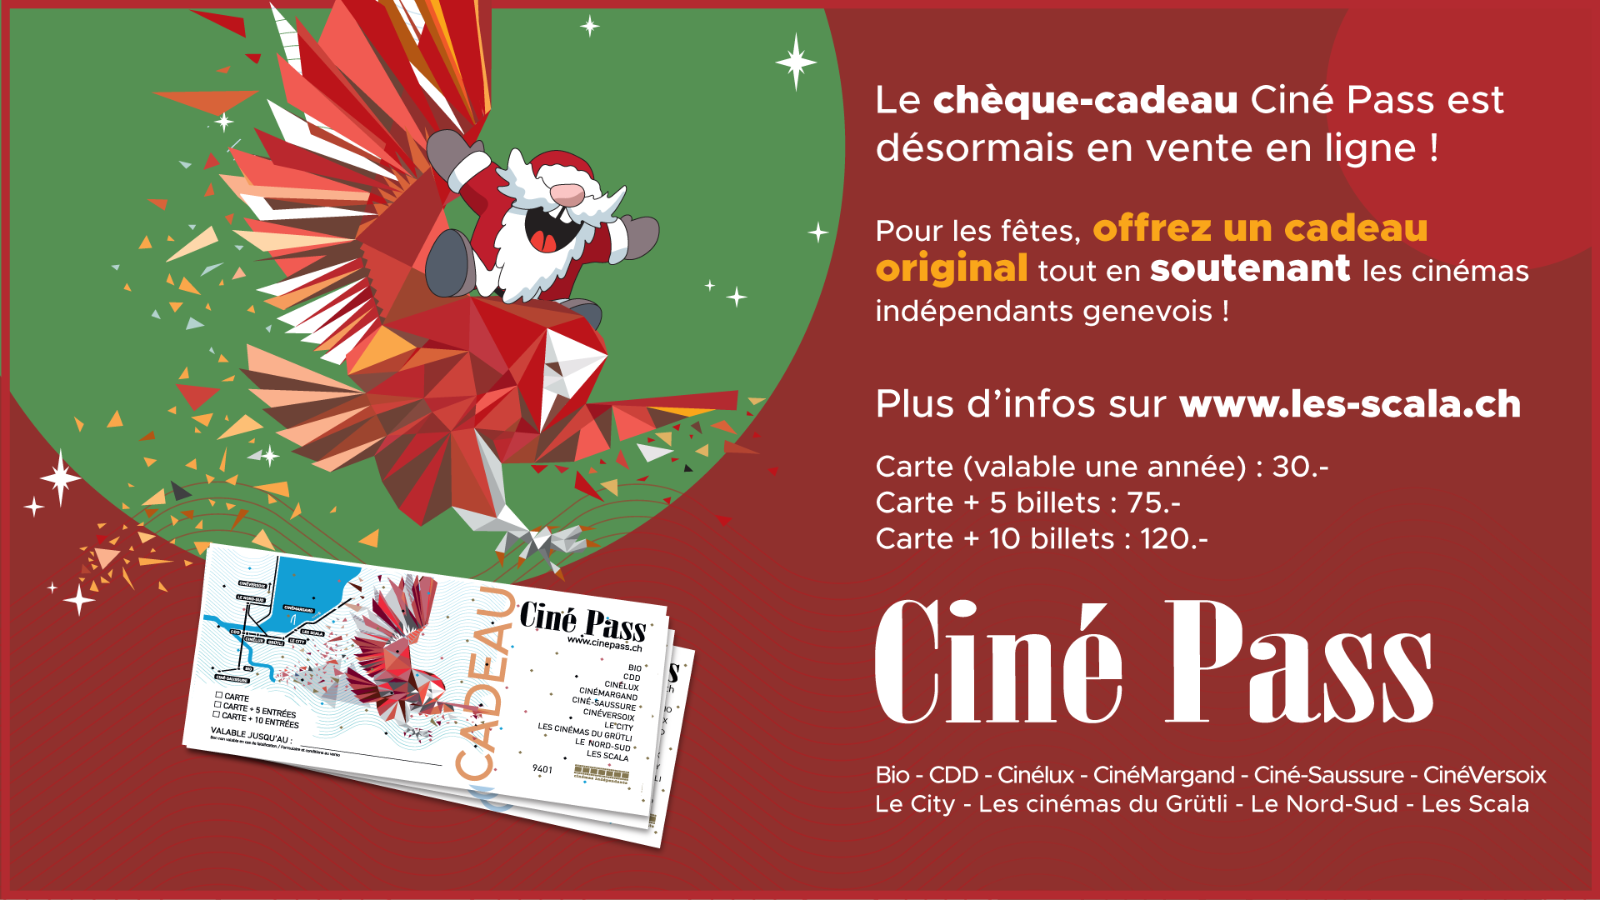 Carte Cadeau Merci - Cahiers du Cinéma